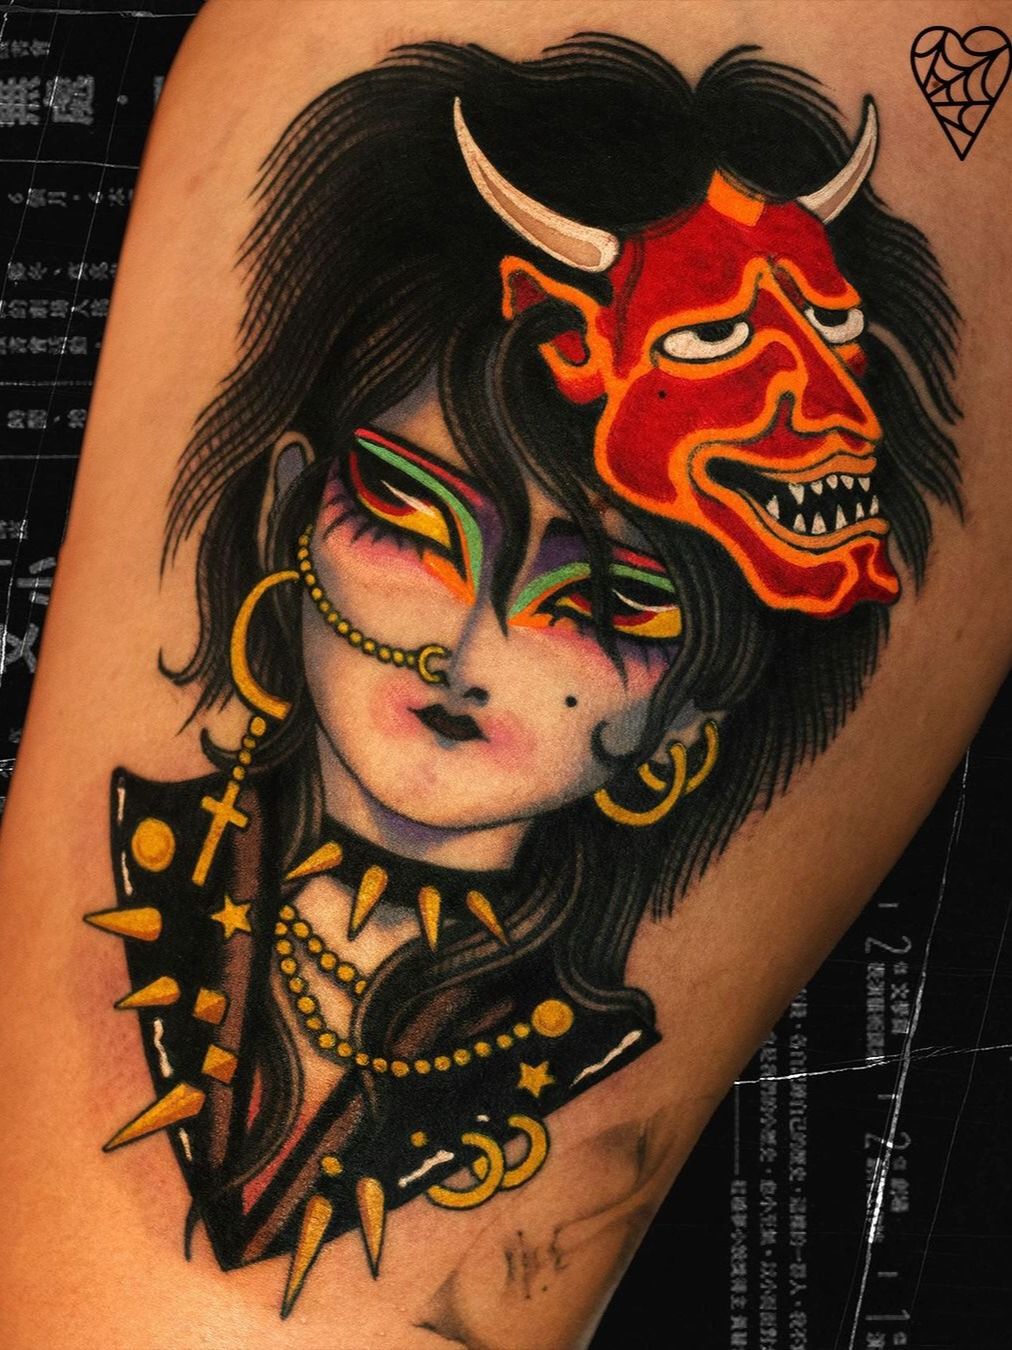 Details more than 51 traditional illustrative portrait tattoo super hot   incdgdbentre